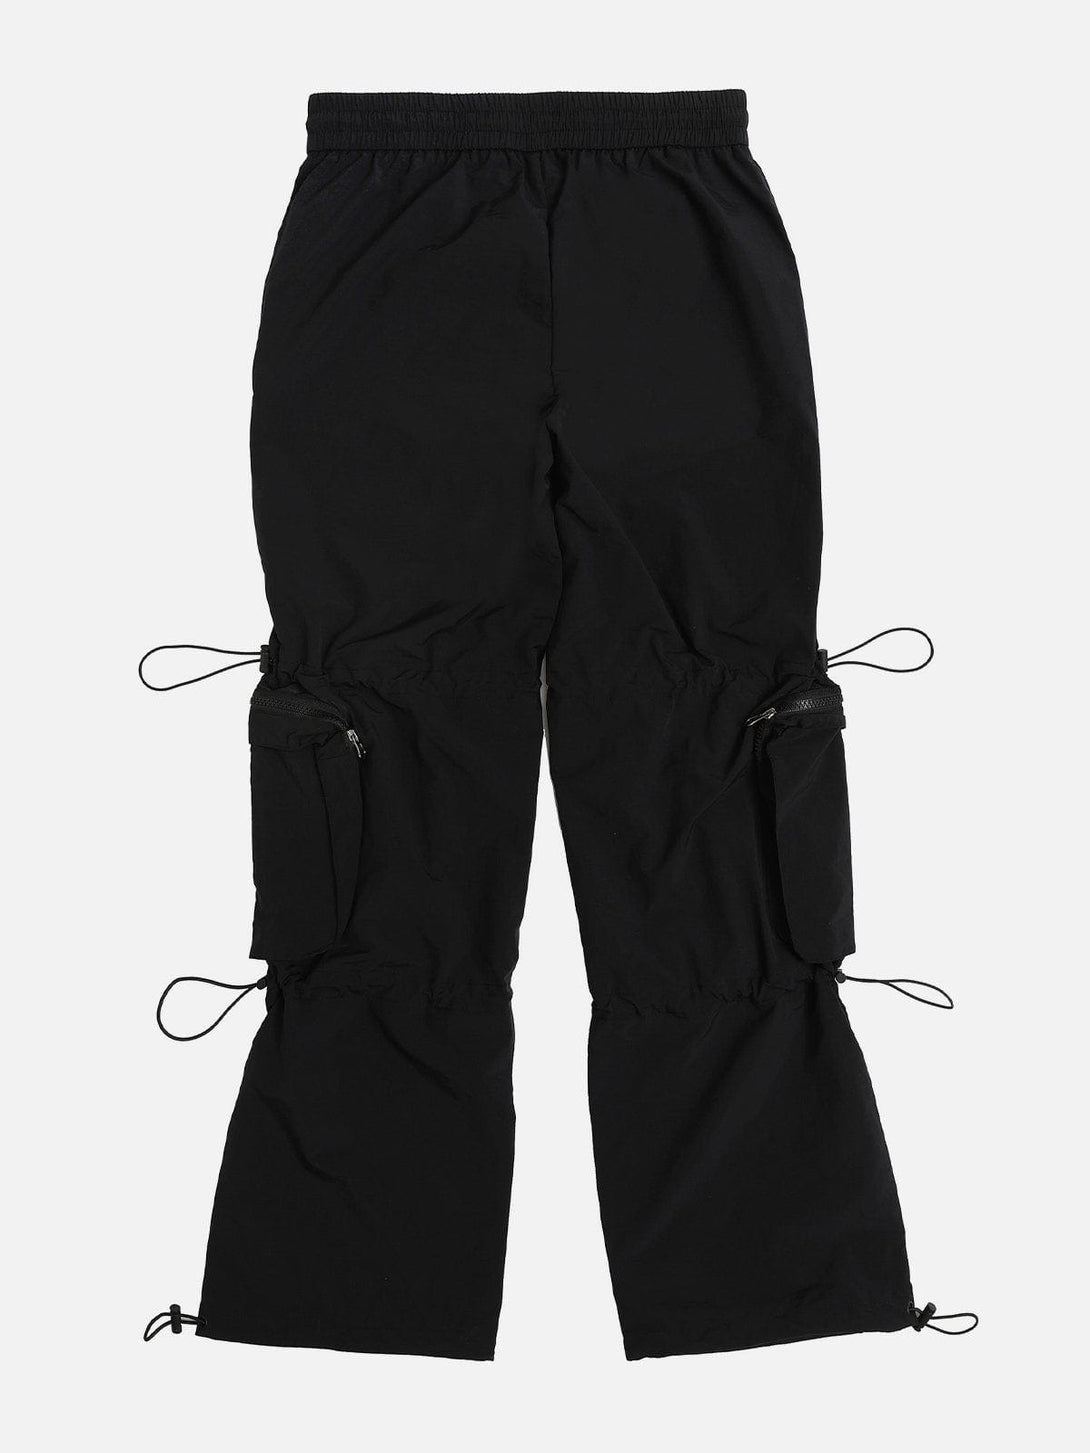 Ellesey - Large Multiple Pockets Drawstring Decoration Cargo Pants- Streetwear Fashion - ellesey.com